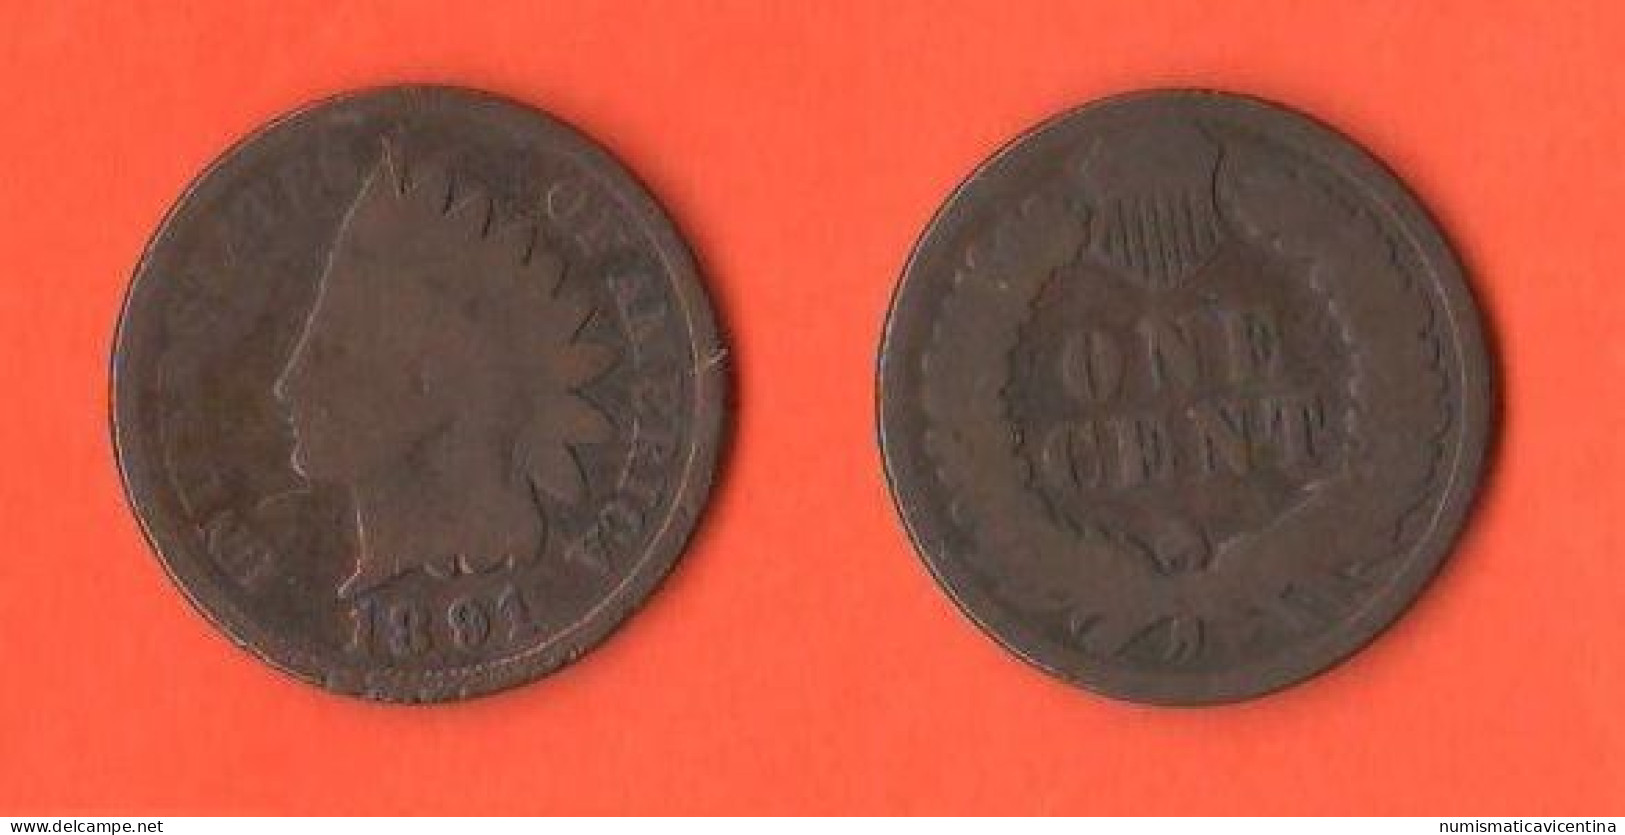 America  1 Cent 1891 USA One Cent America Bronze Coin   XXX - Commemoratives